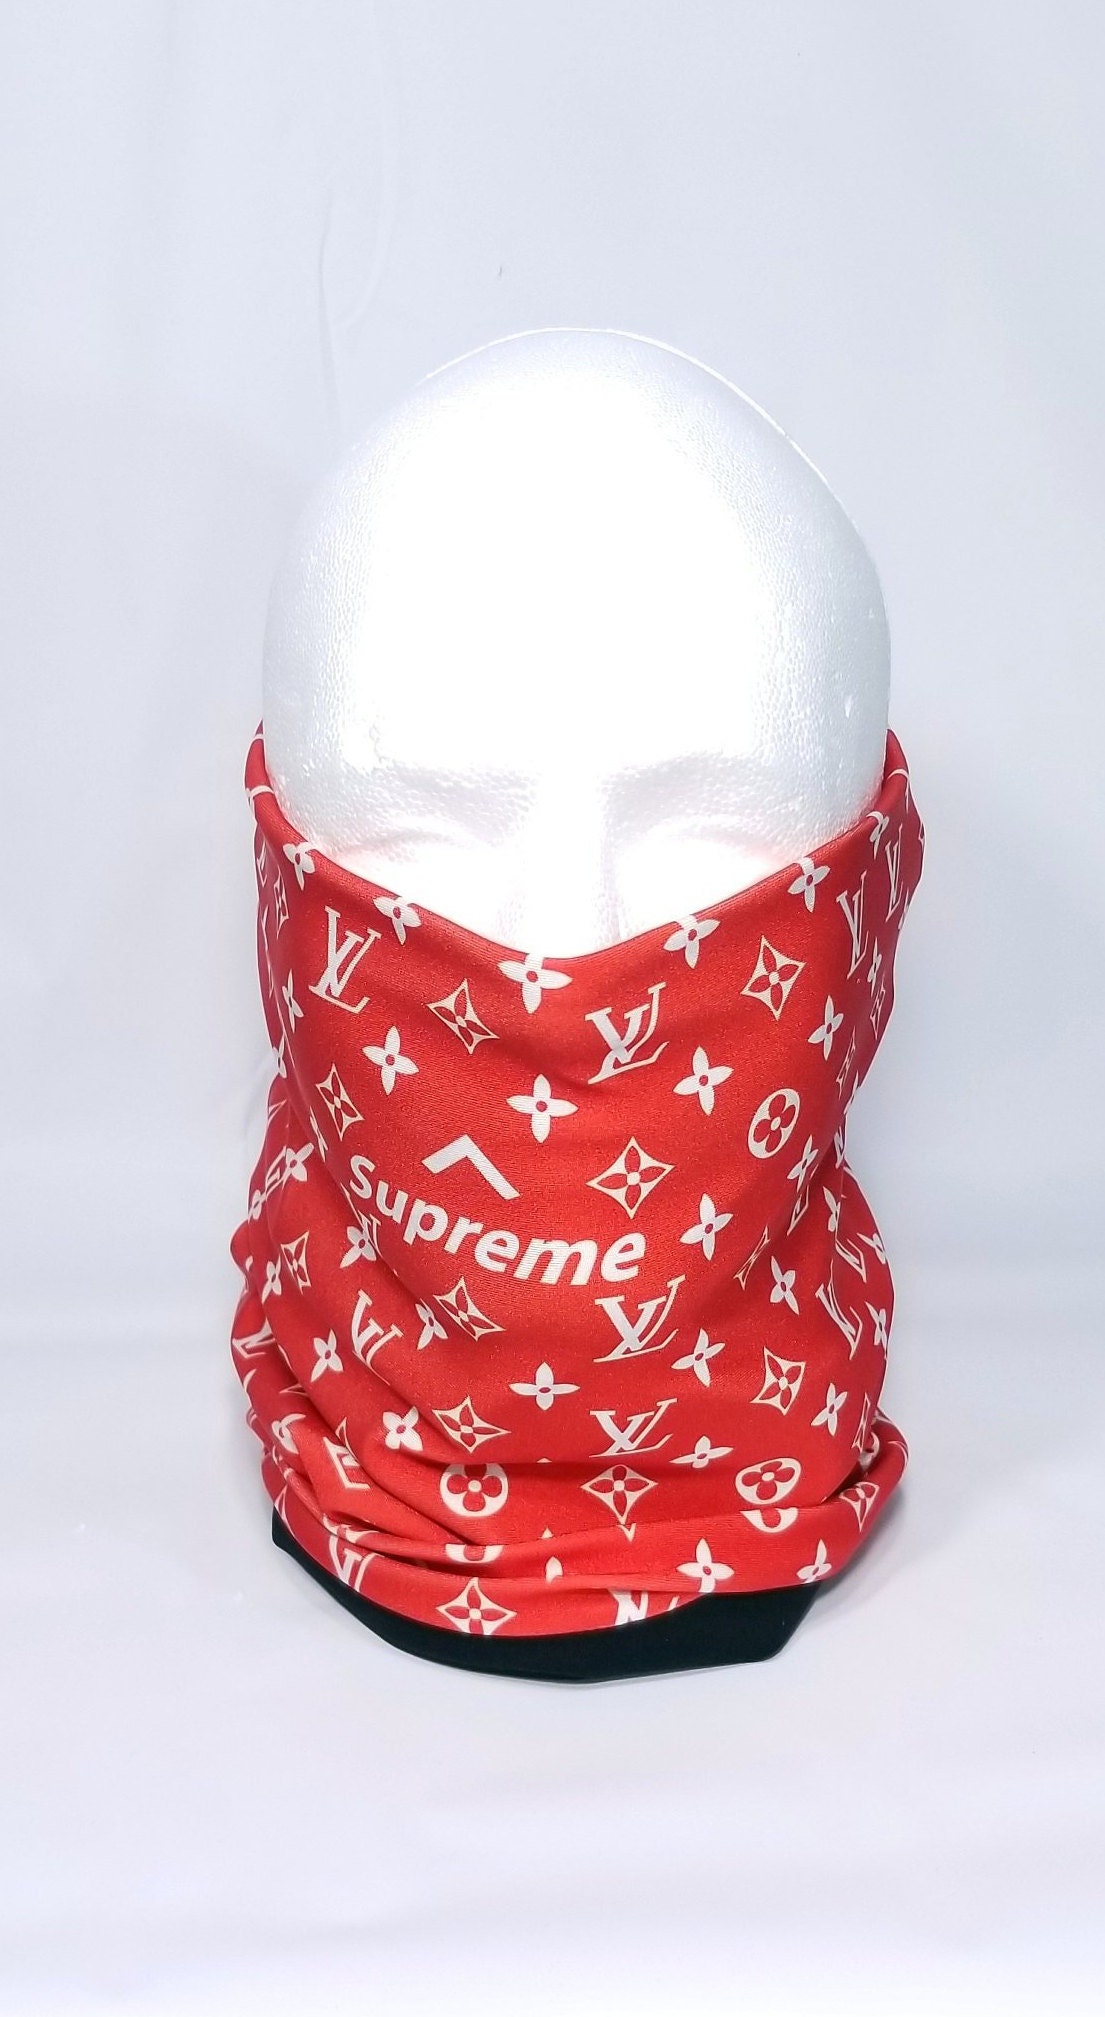 LV Supreme Balaclava Gaiter Head sock Supreme helmet | Etsy